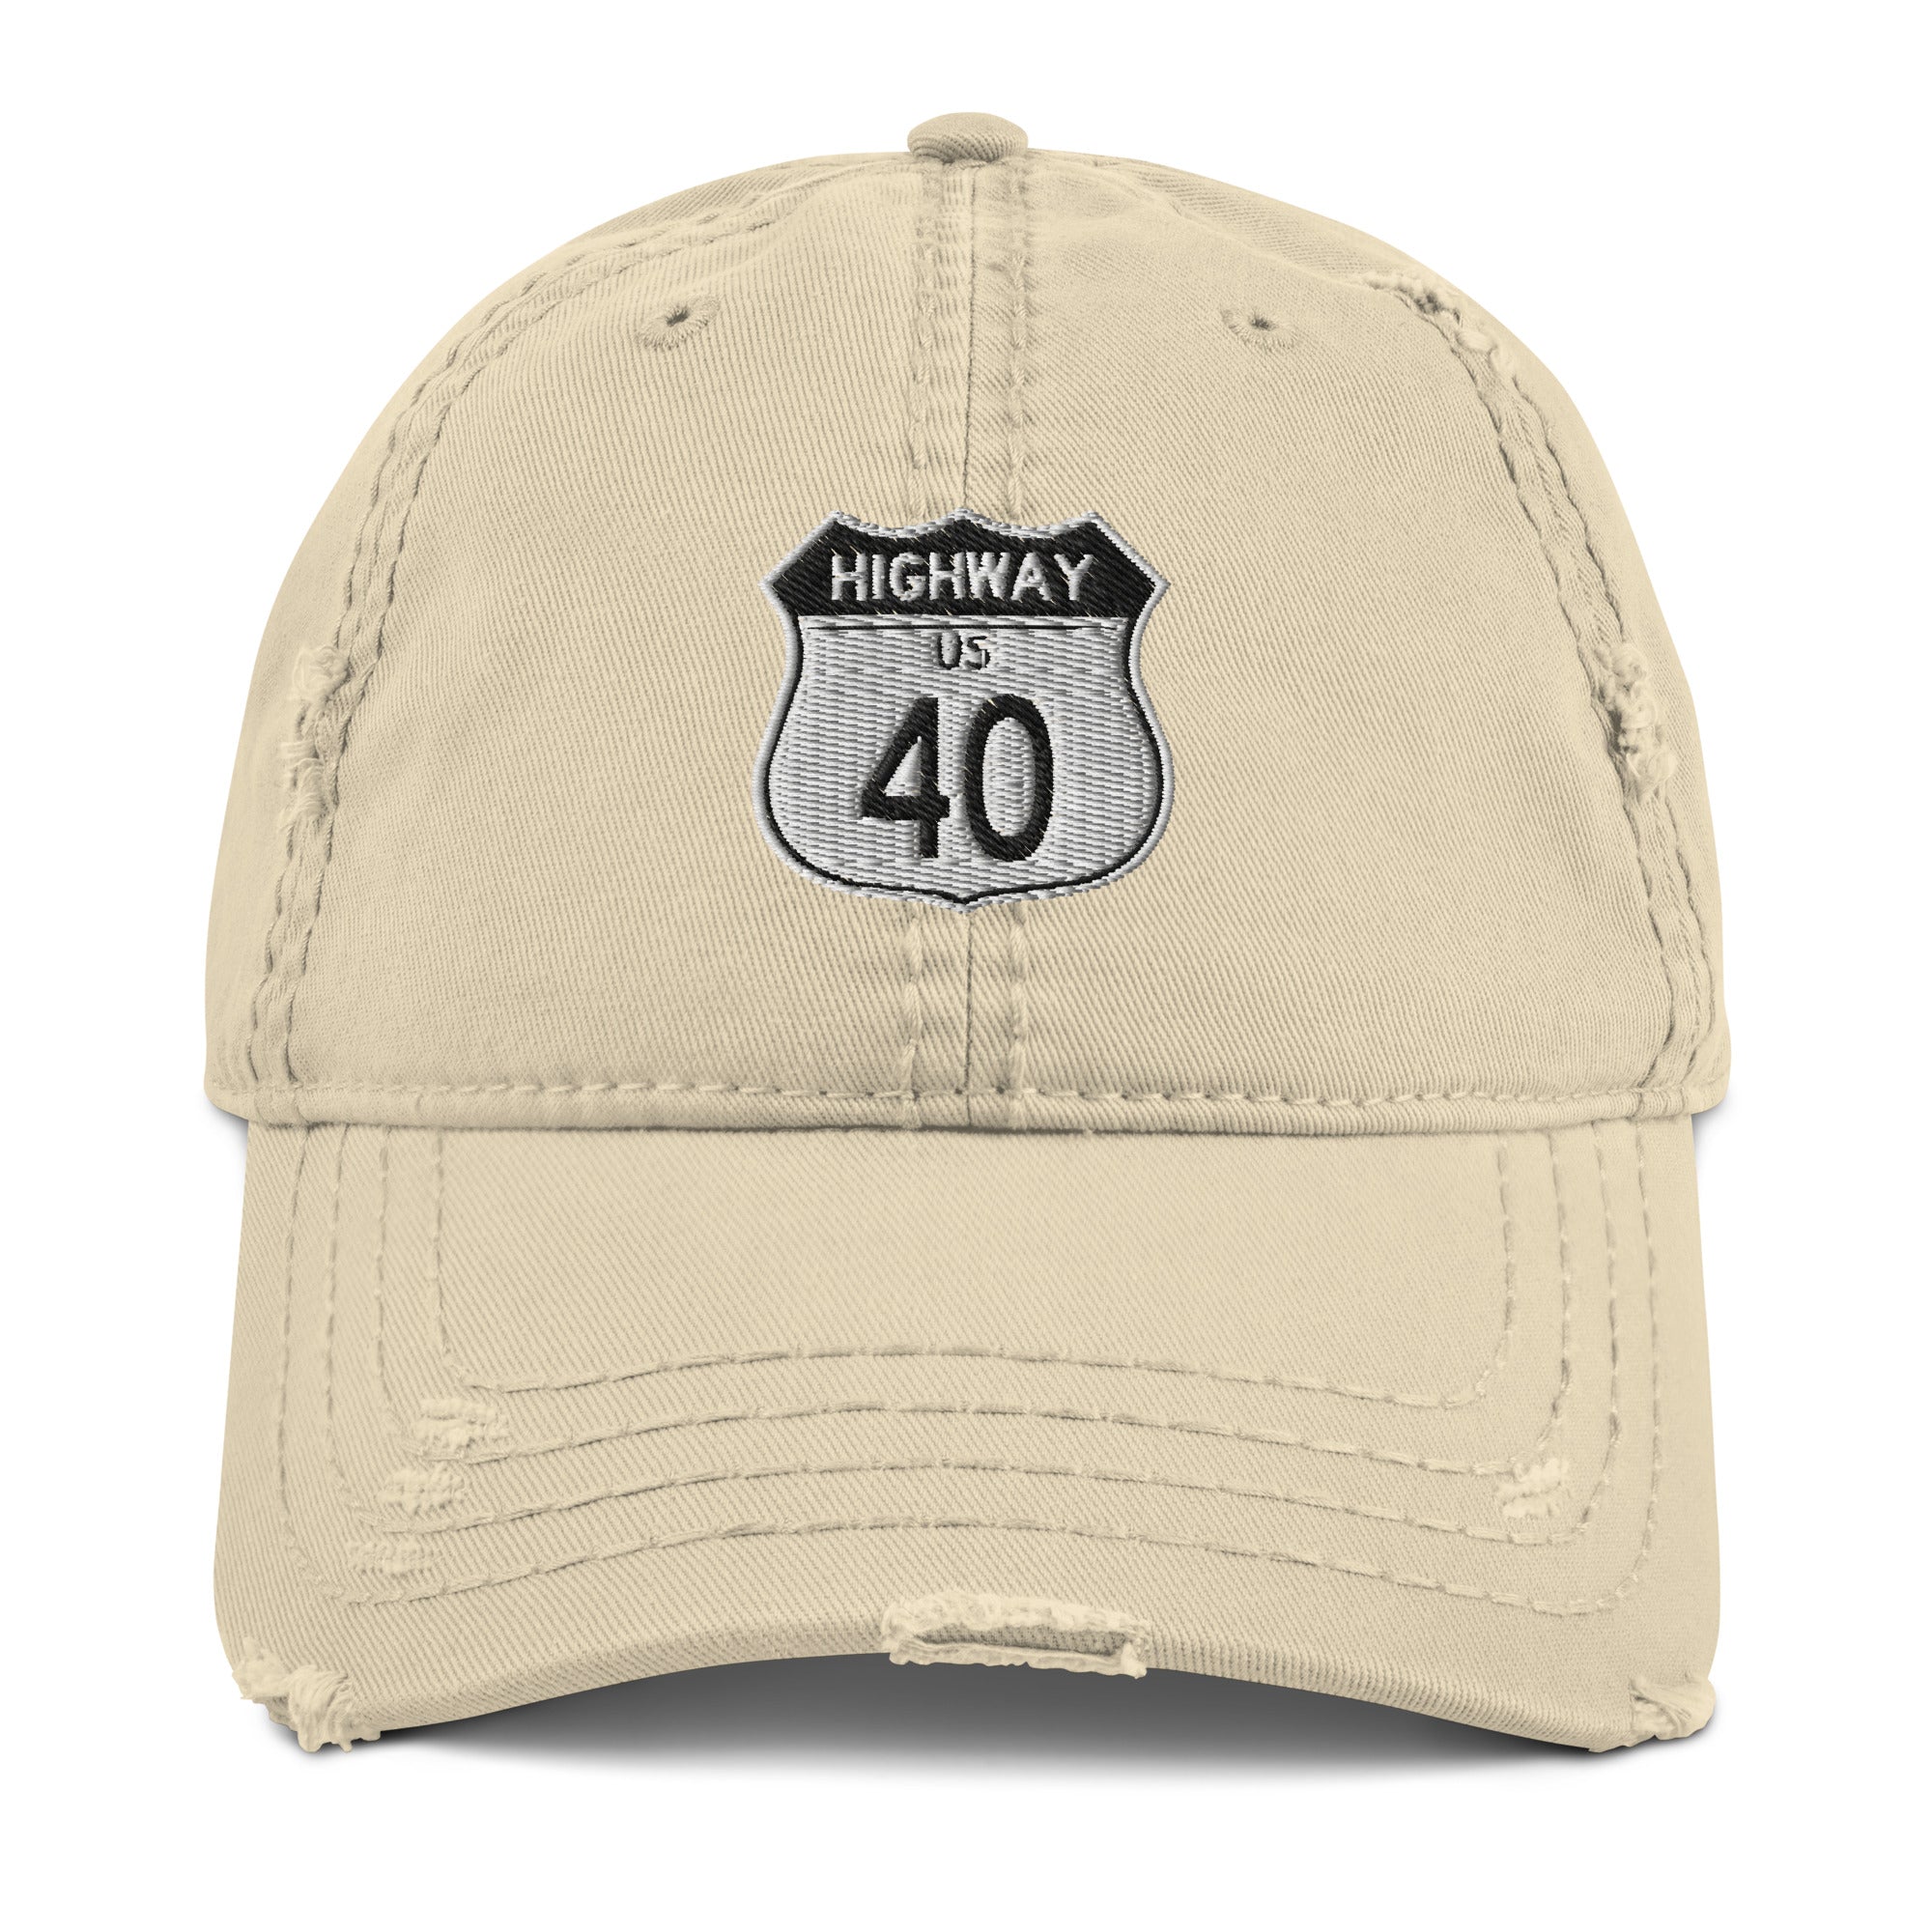 Highway 40 Distressed Dad Hat